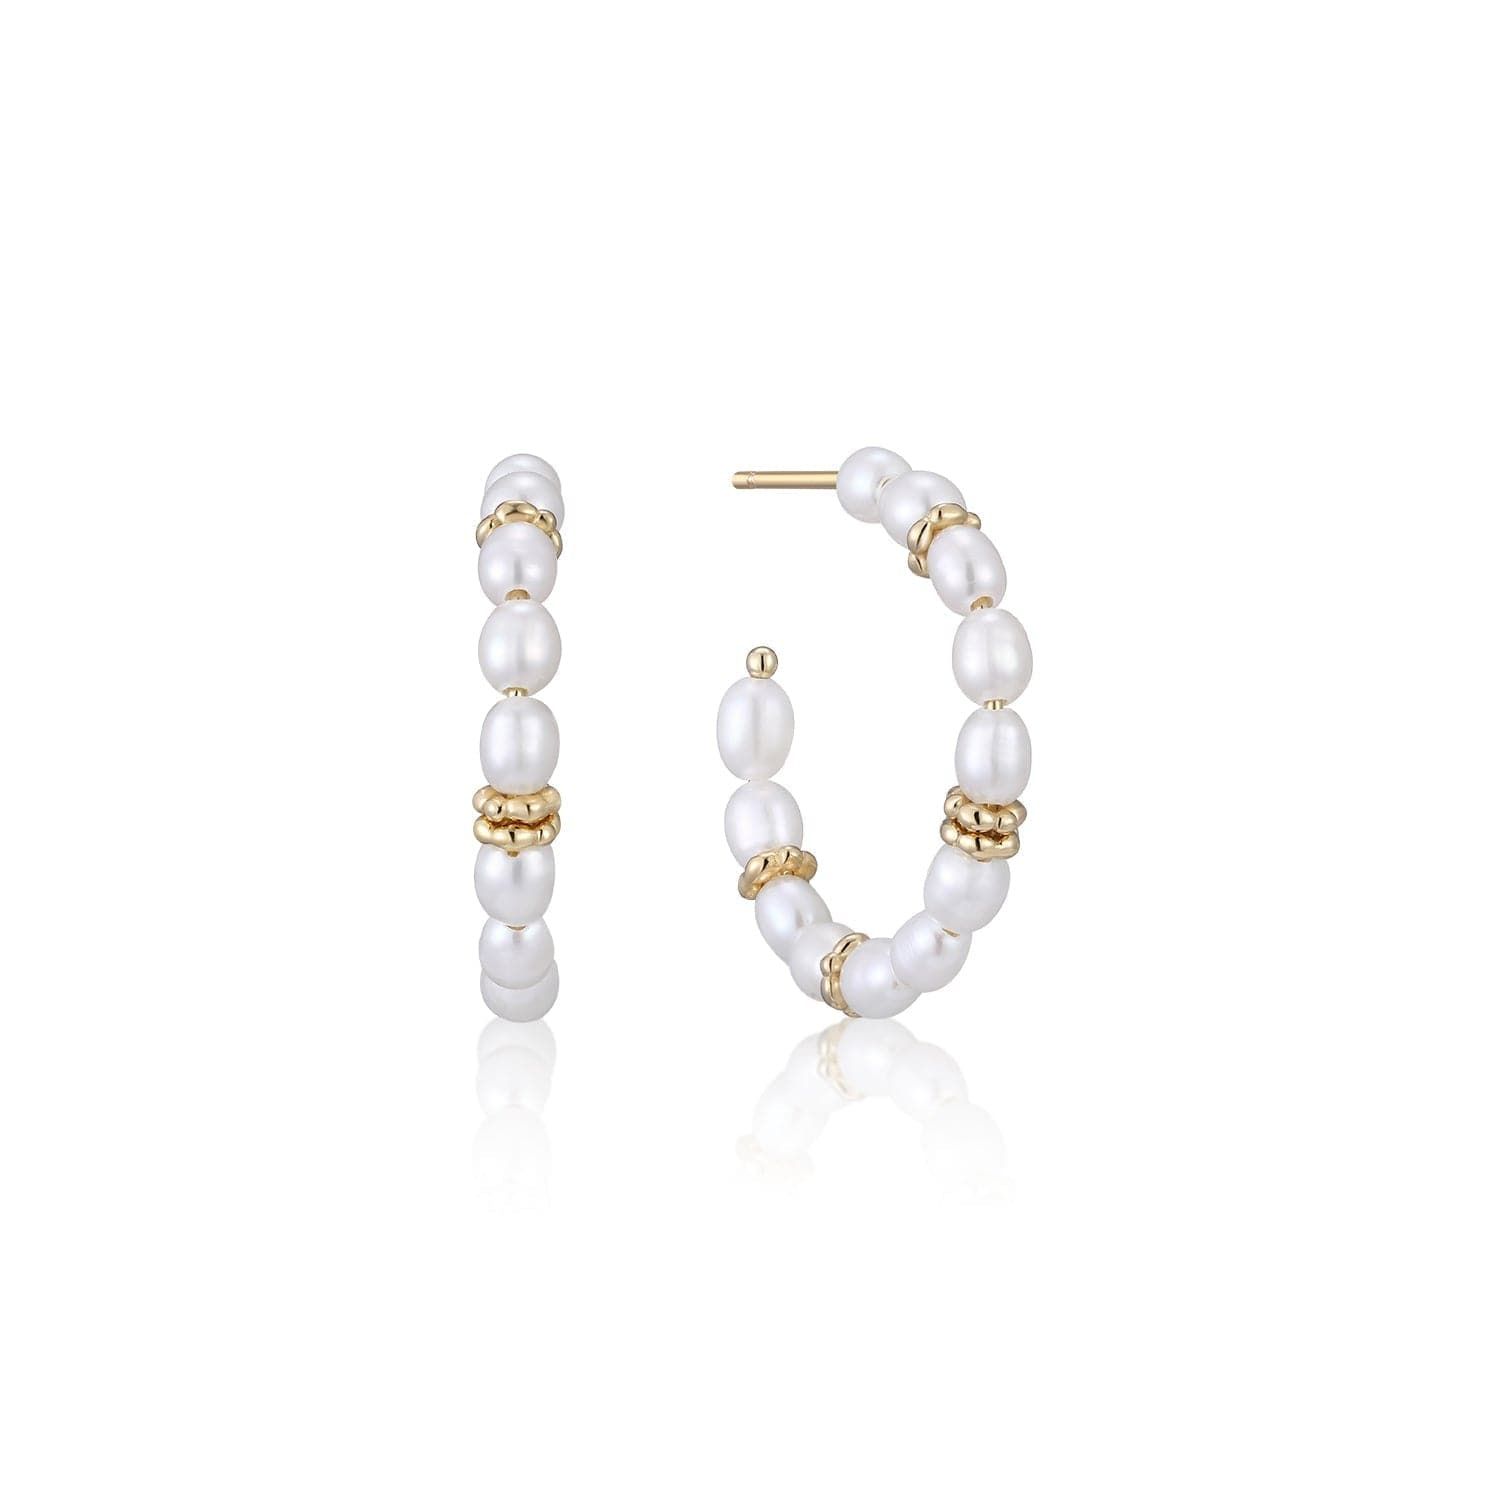 a pair of pearl and gold hoop earrings